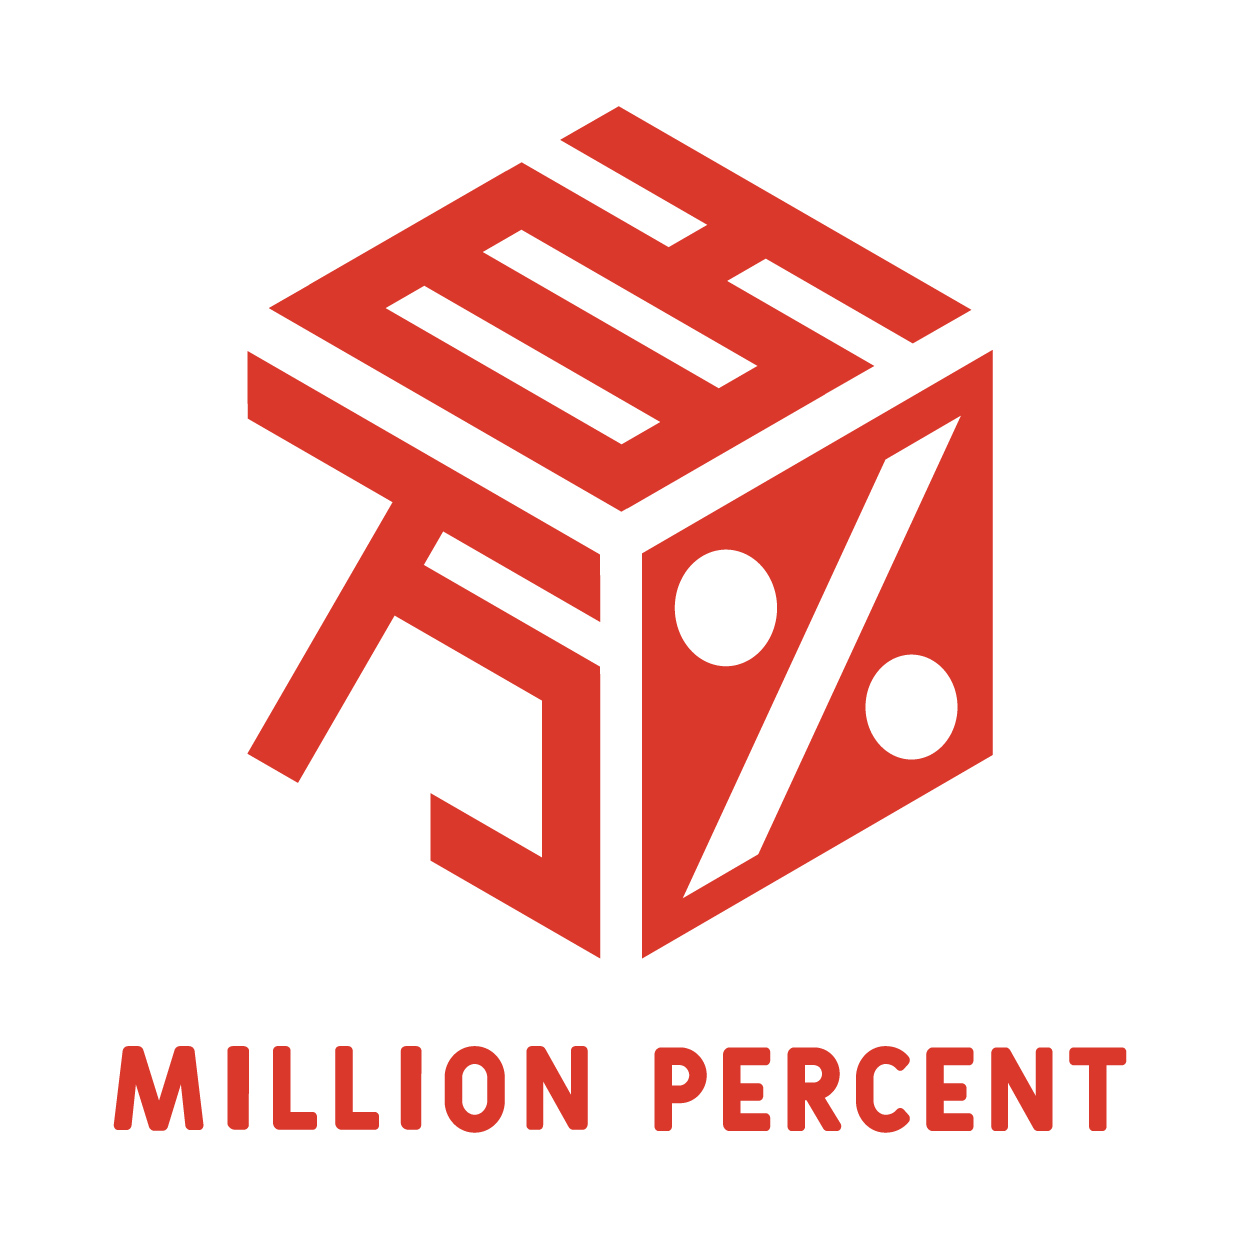 MILLION PERCENT